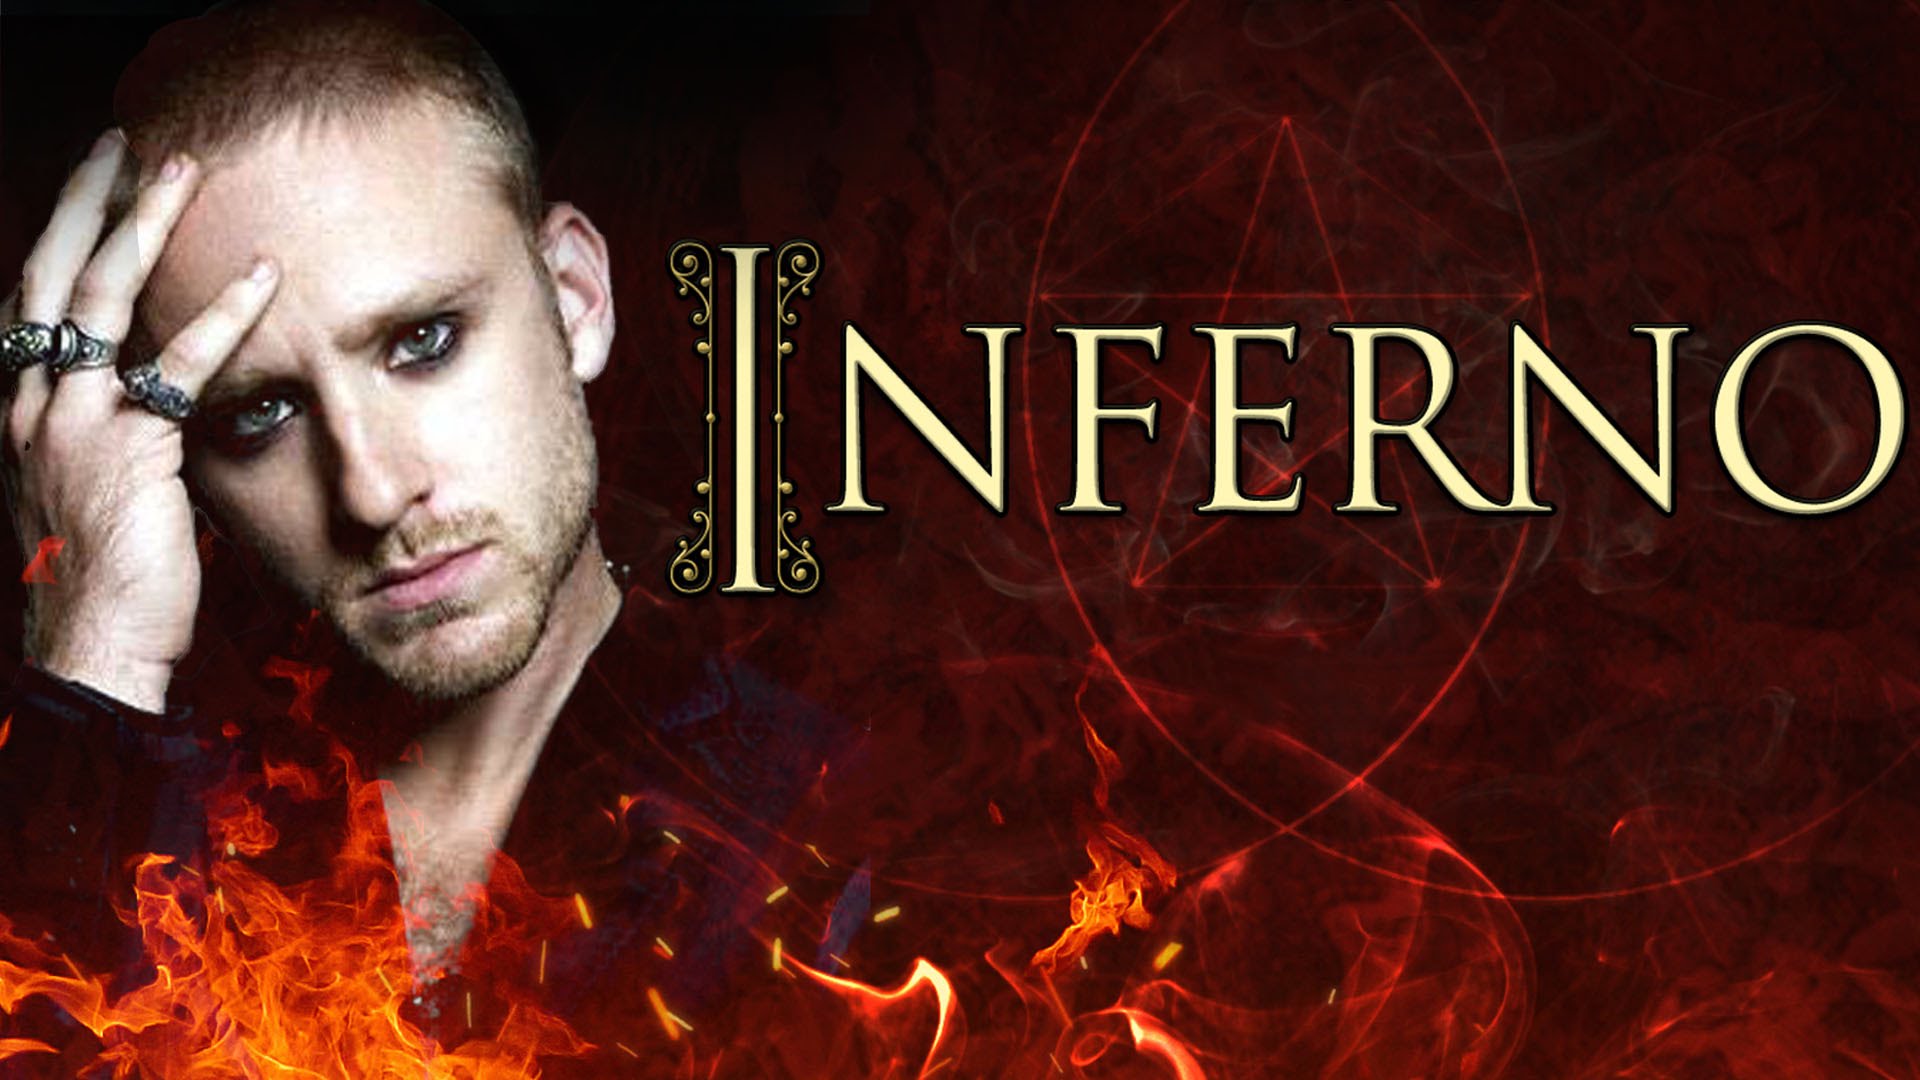 Online Inferno Movie Watch 2016 Full-Length